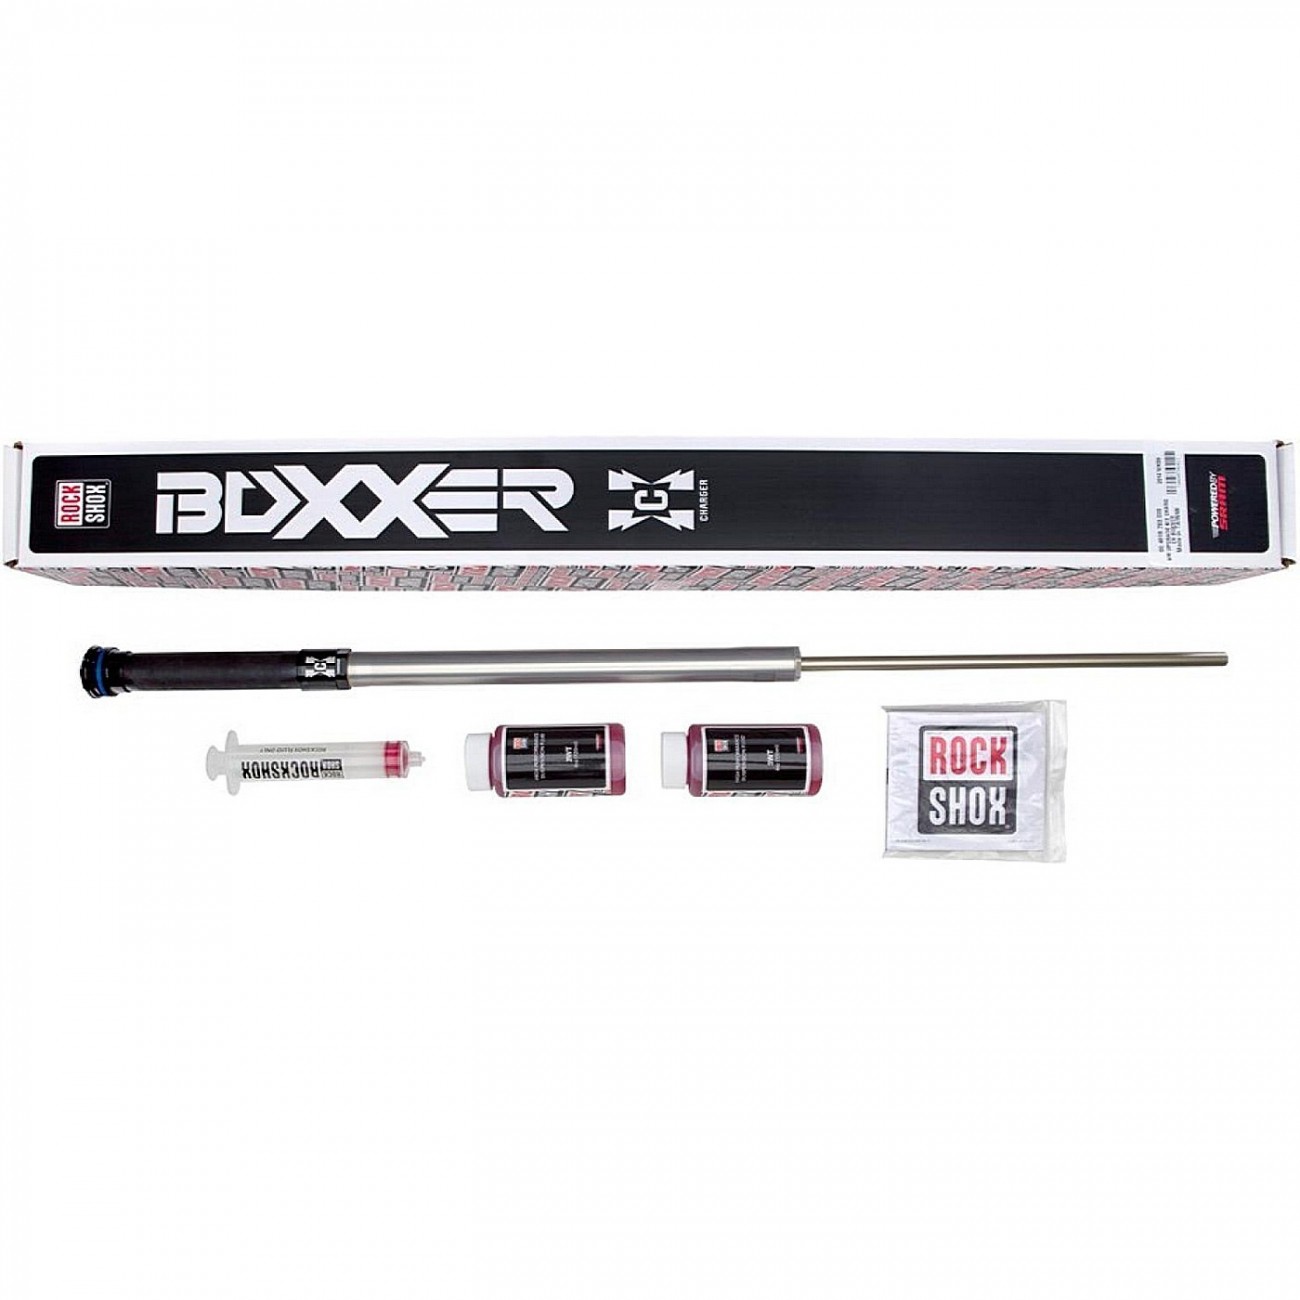 Dämpfer-upgrade-kit – charger – inklusive kompletter rechter seitenteile – boxxer ( - 1